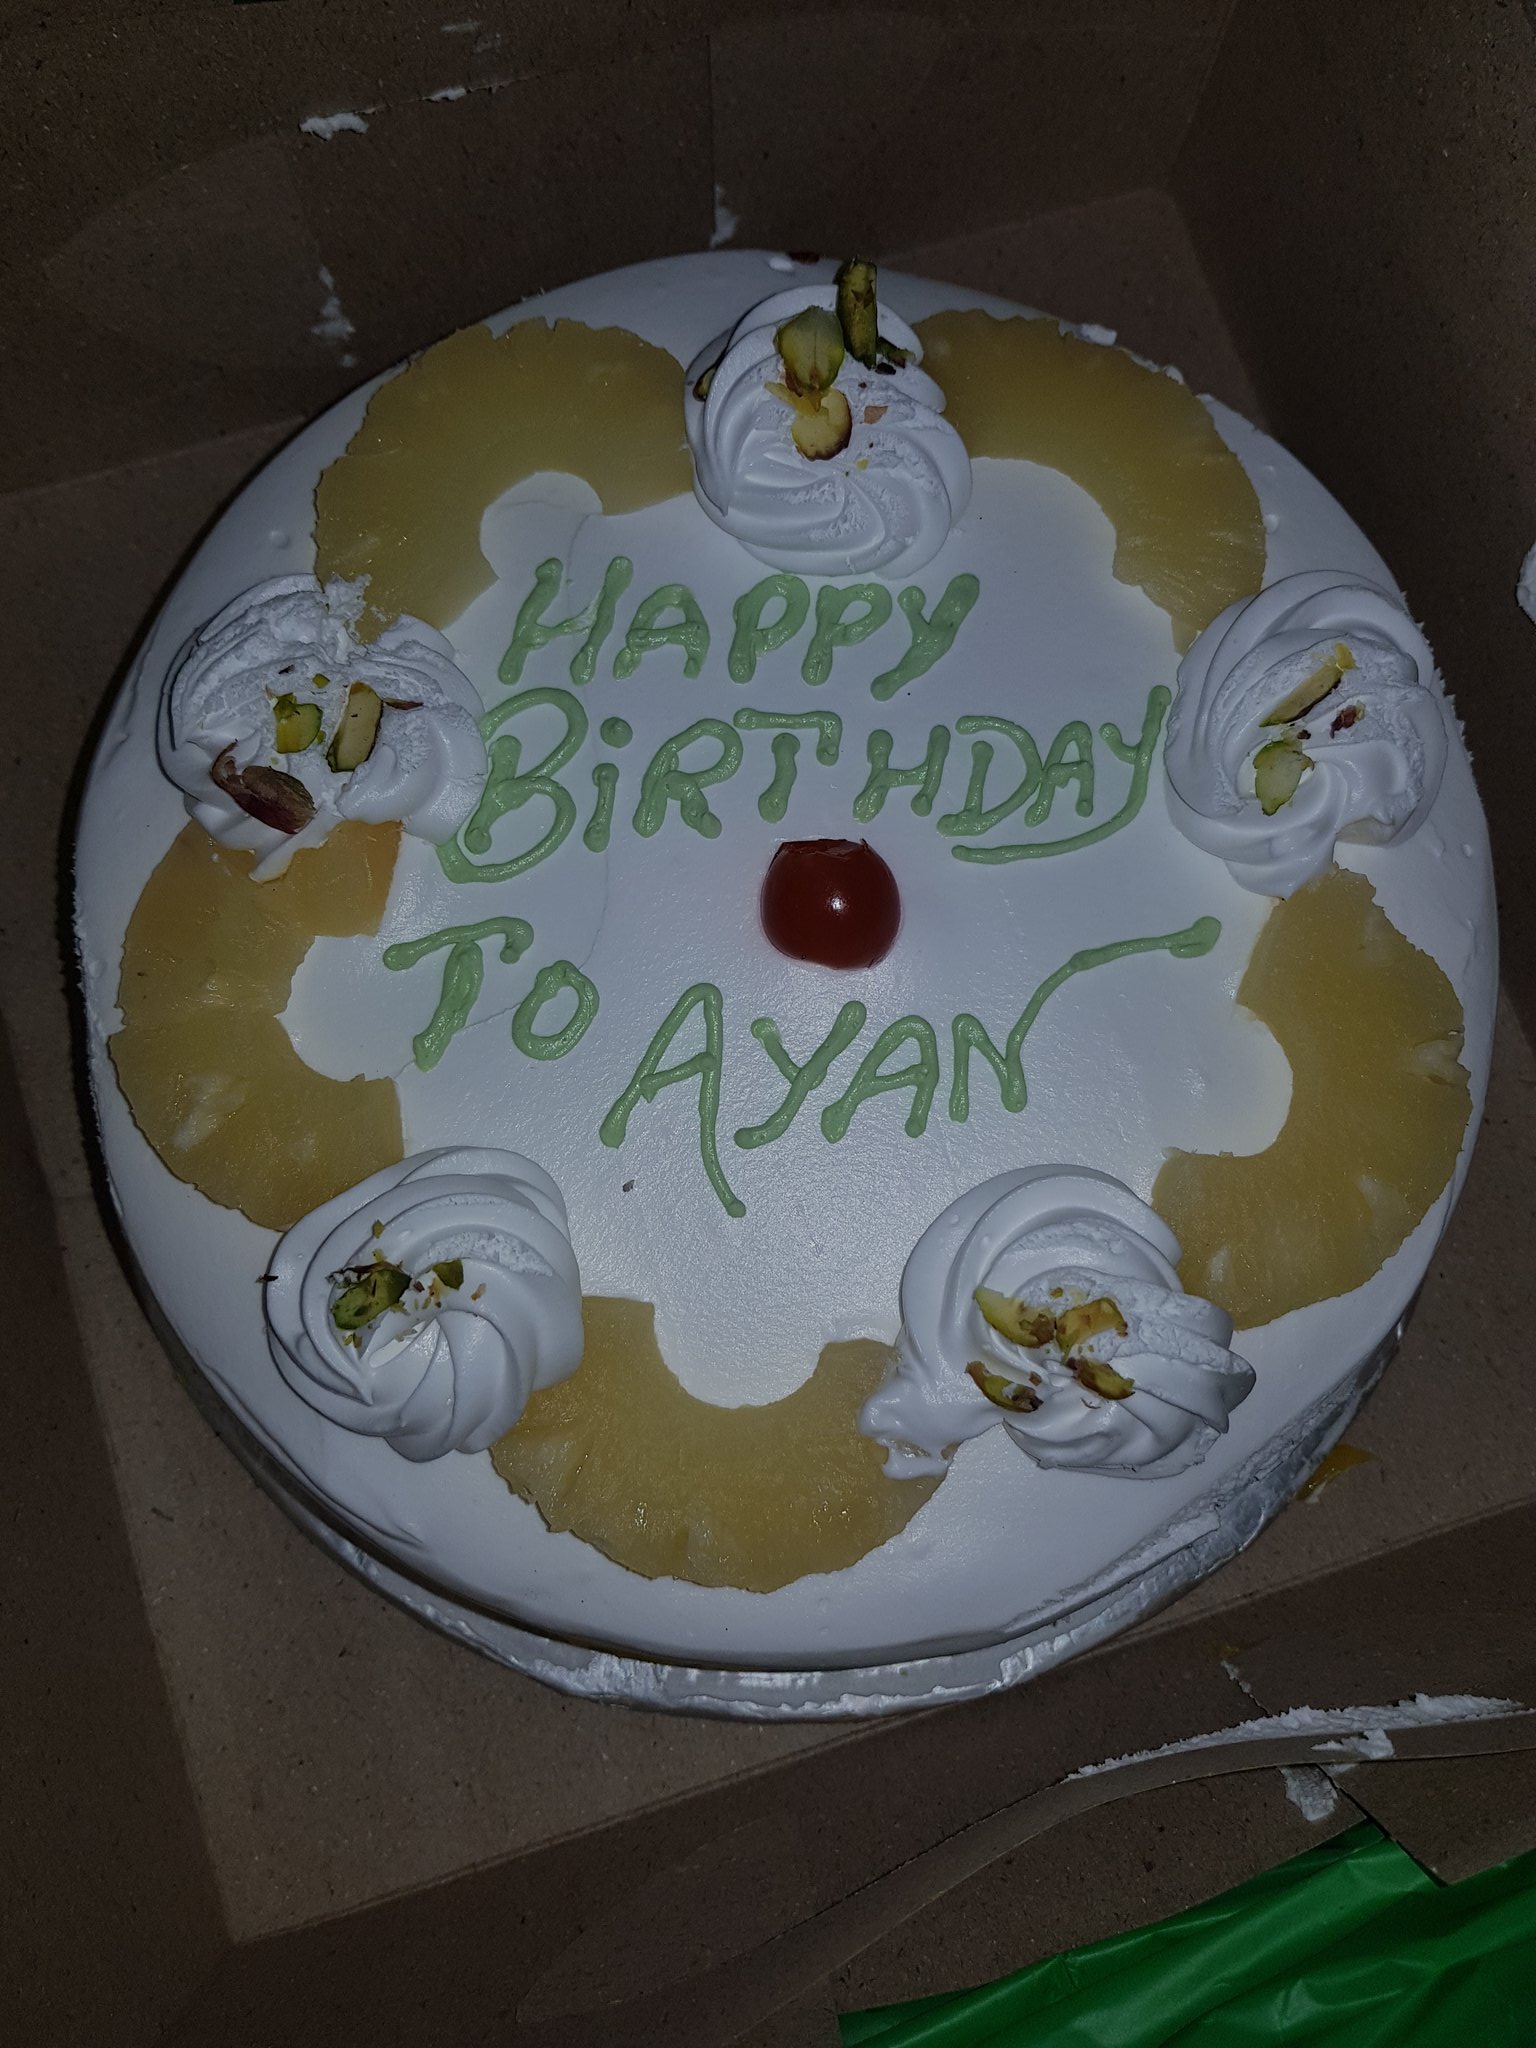 Ayaan Happy Birthday Cakes Pics Gallery